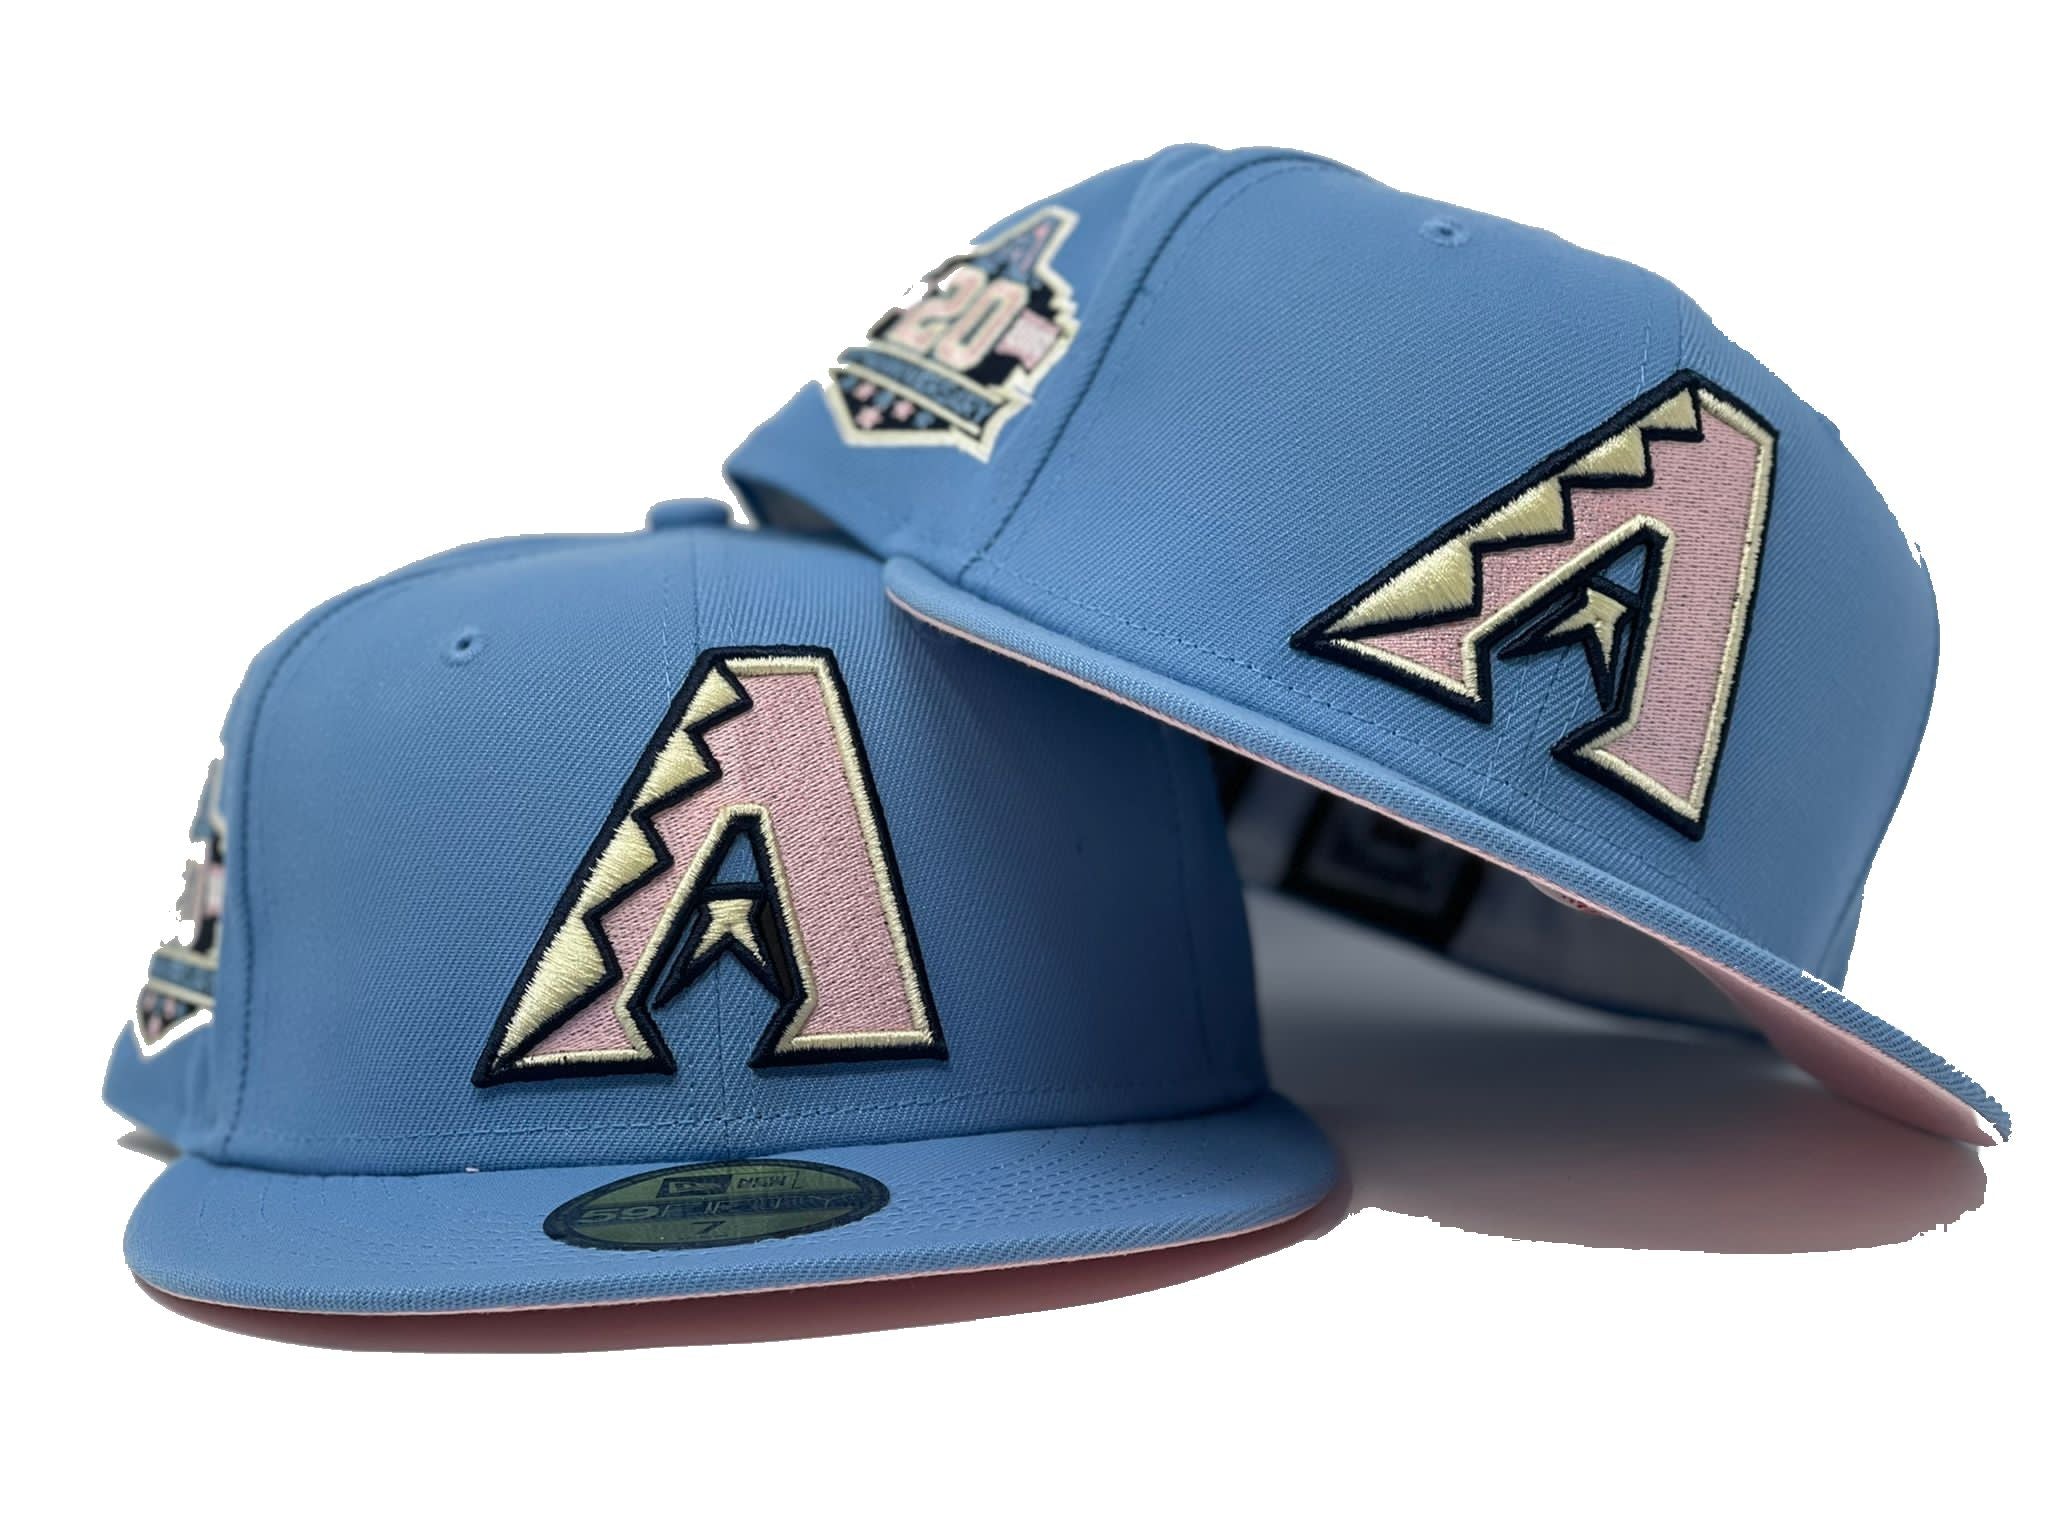 New Era Arizona Diamondbacks Colorpack 59FIFTY Mens Fitted Hat (Blue/White)